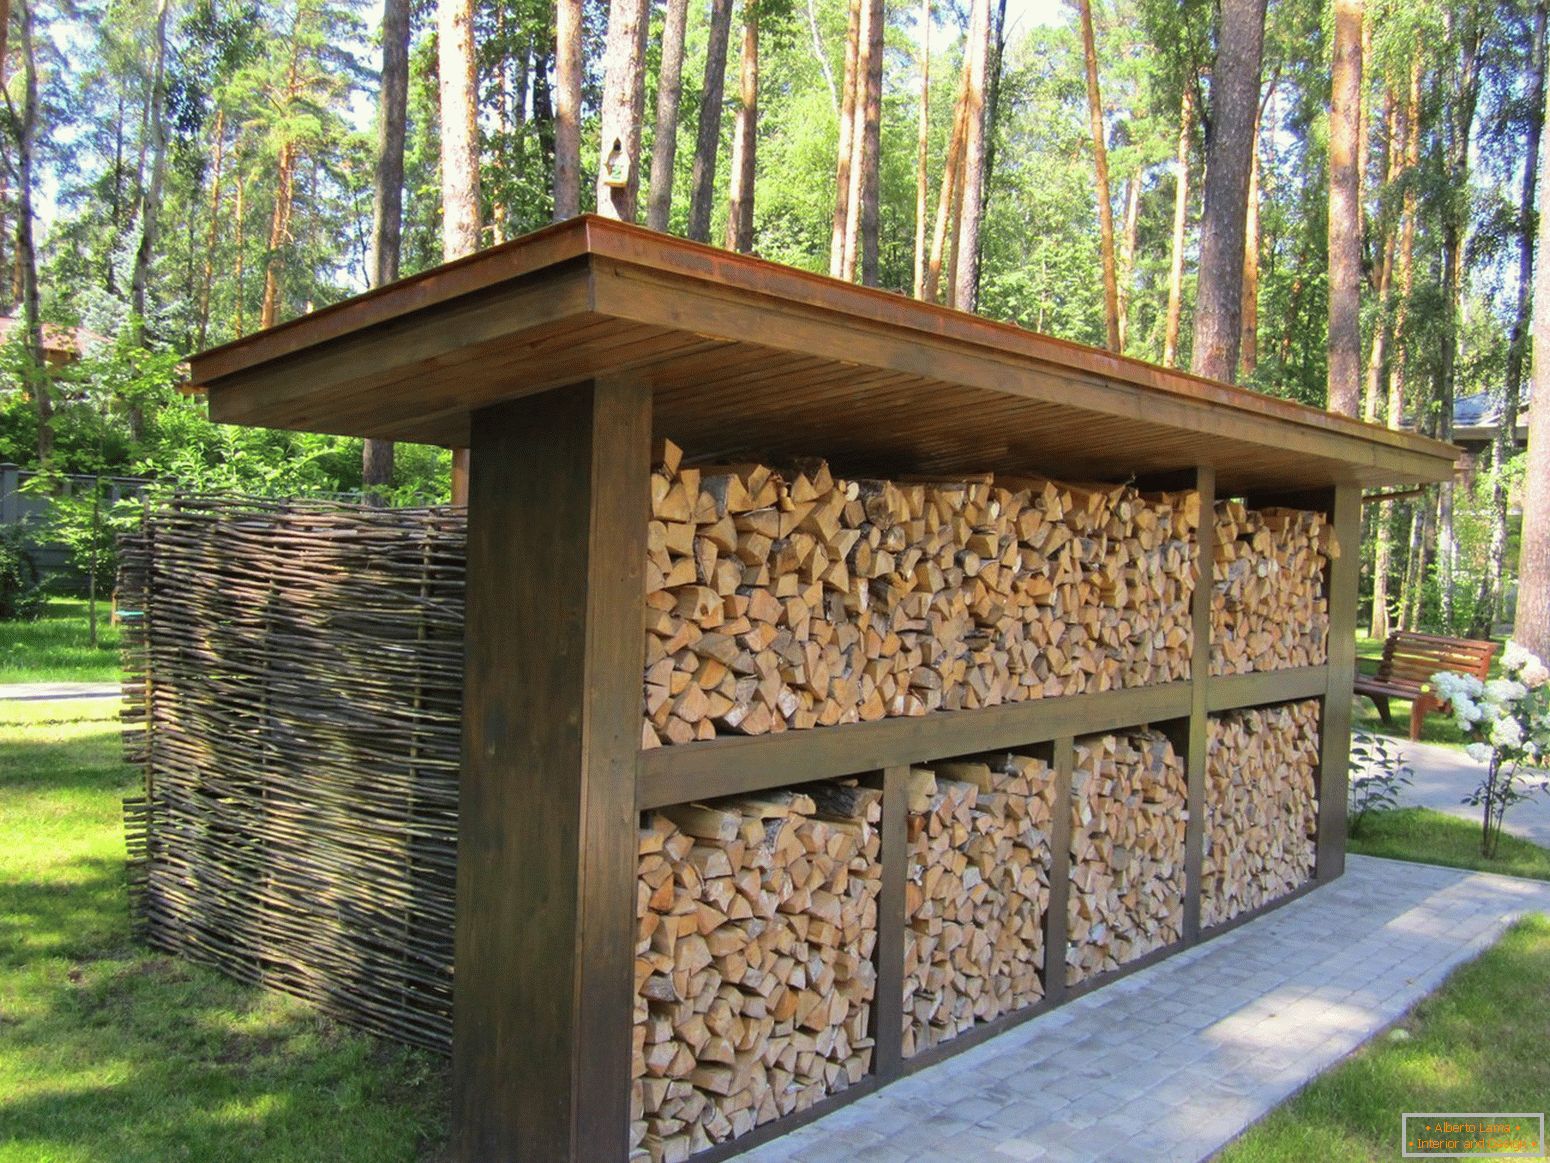 Storage of firewood on site